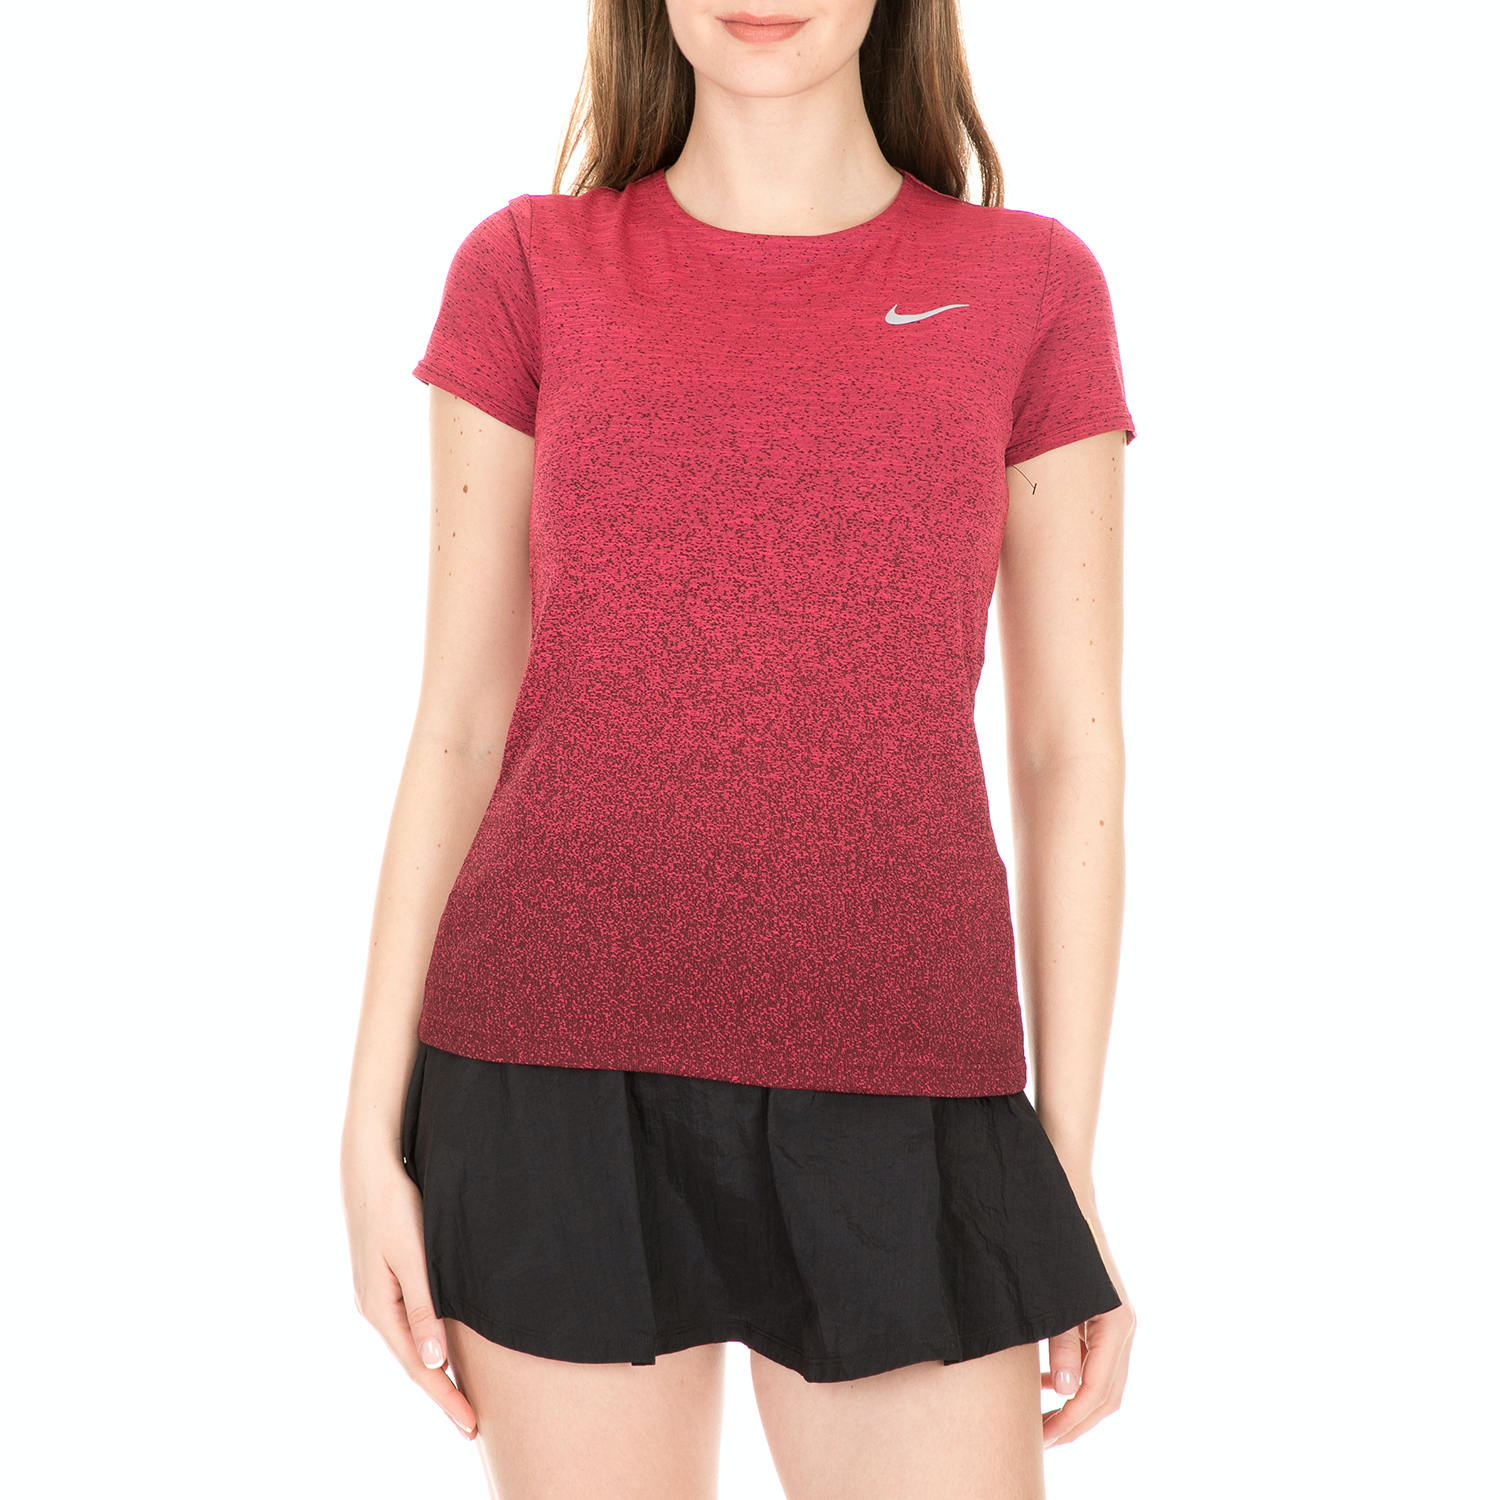 NIKE - Γυναικείο t-shirt NIKE MEDALIST TOP κόκκινο μαύρο Γυναικεία/Ρούχα/Αθλητικά/T-shirt-Τοπ